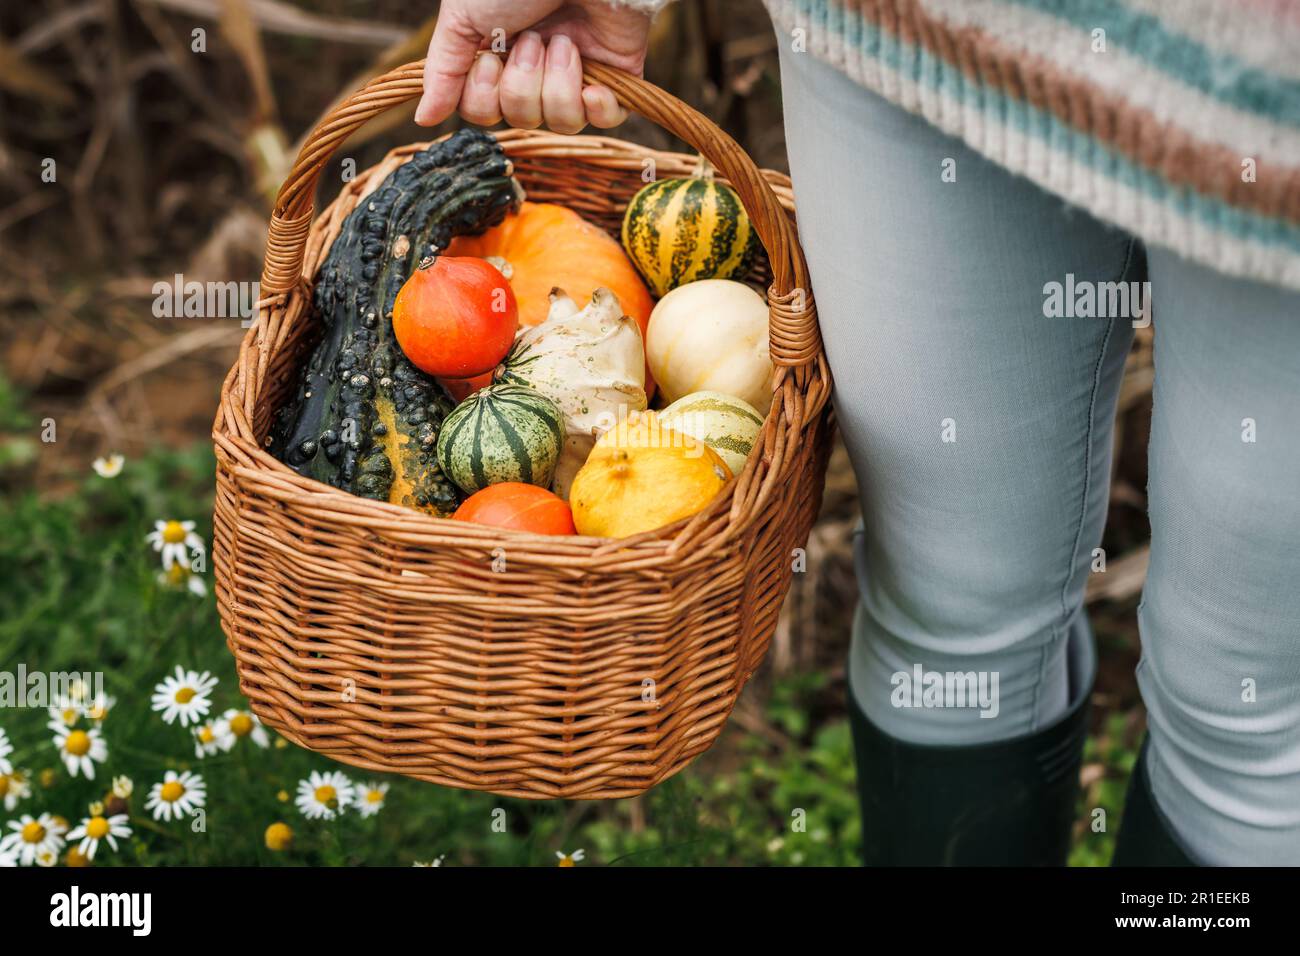 Woman farmer holding decorative pumpkins in wicker basket. Autumn harvest in garden Stock Photo